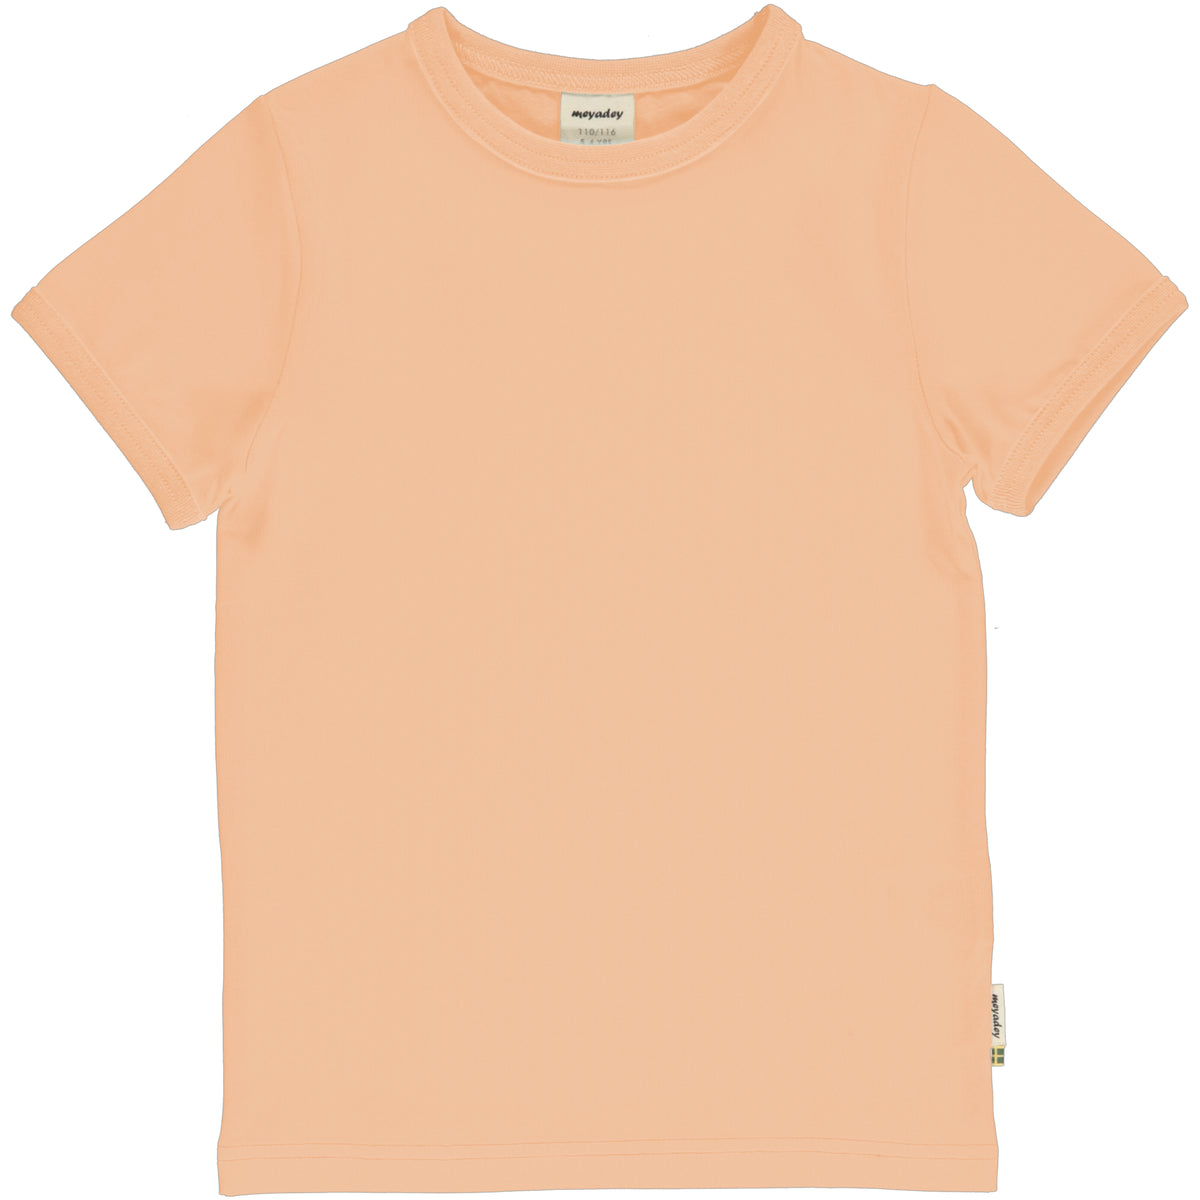 Meyadey - Top SS Solid Orange Soft T-Shirt Zacht Oranje